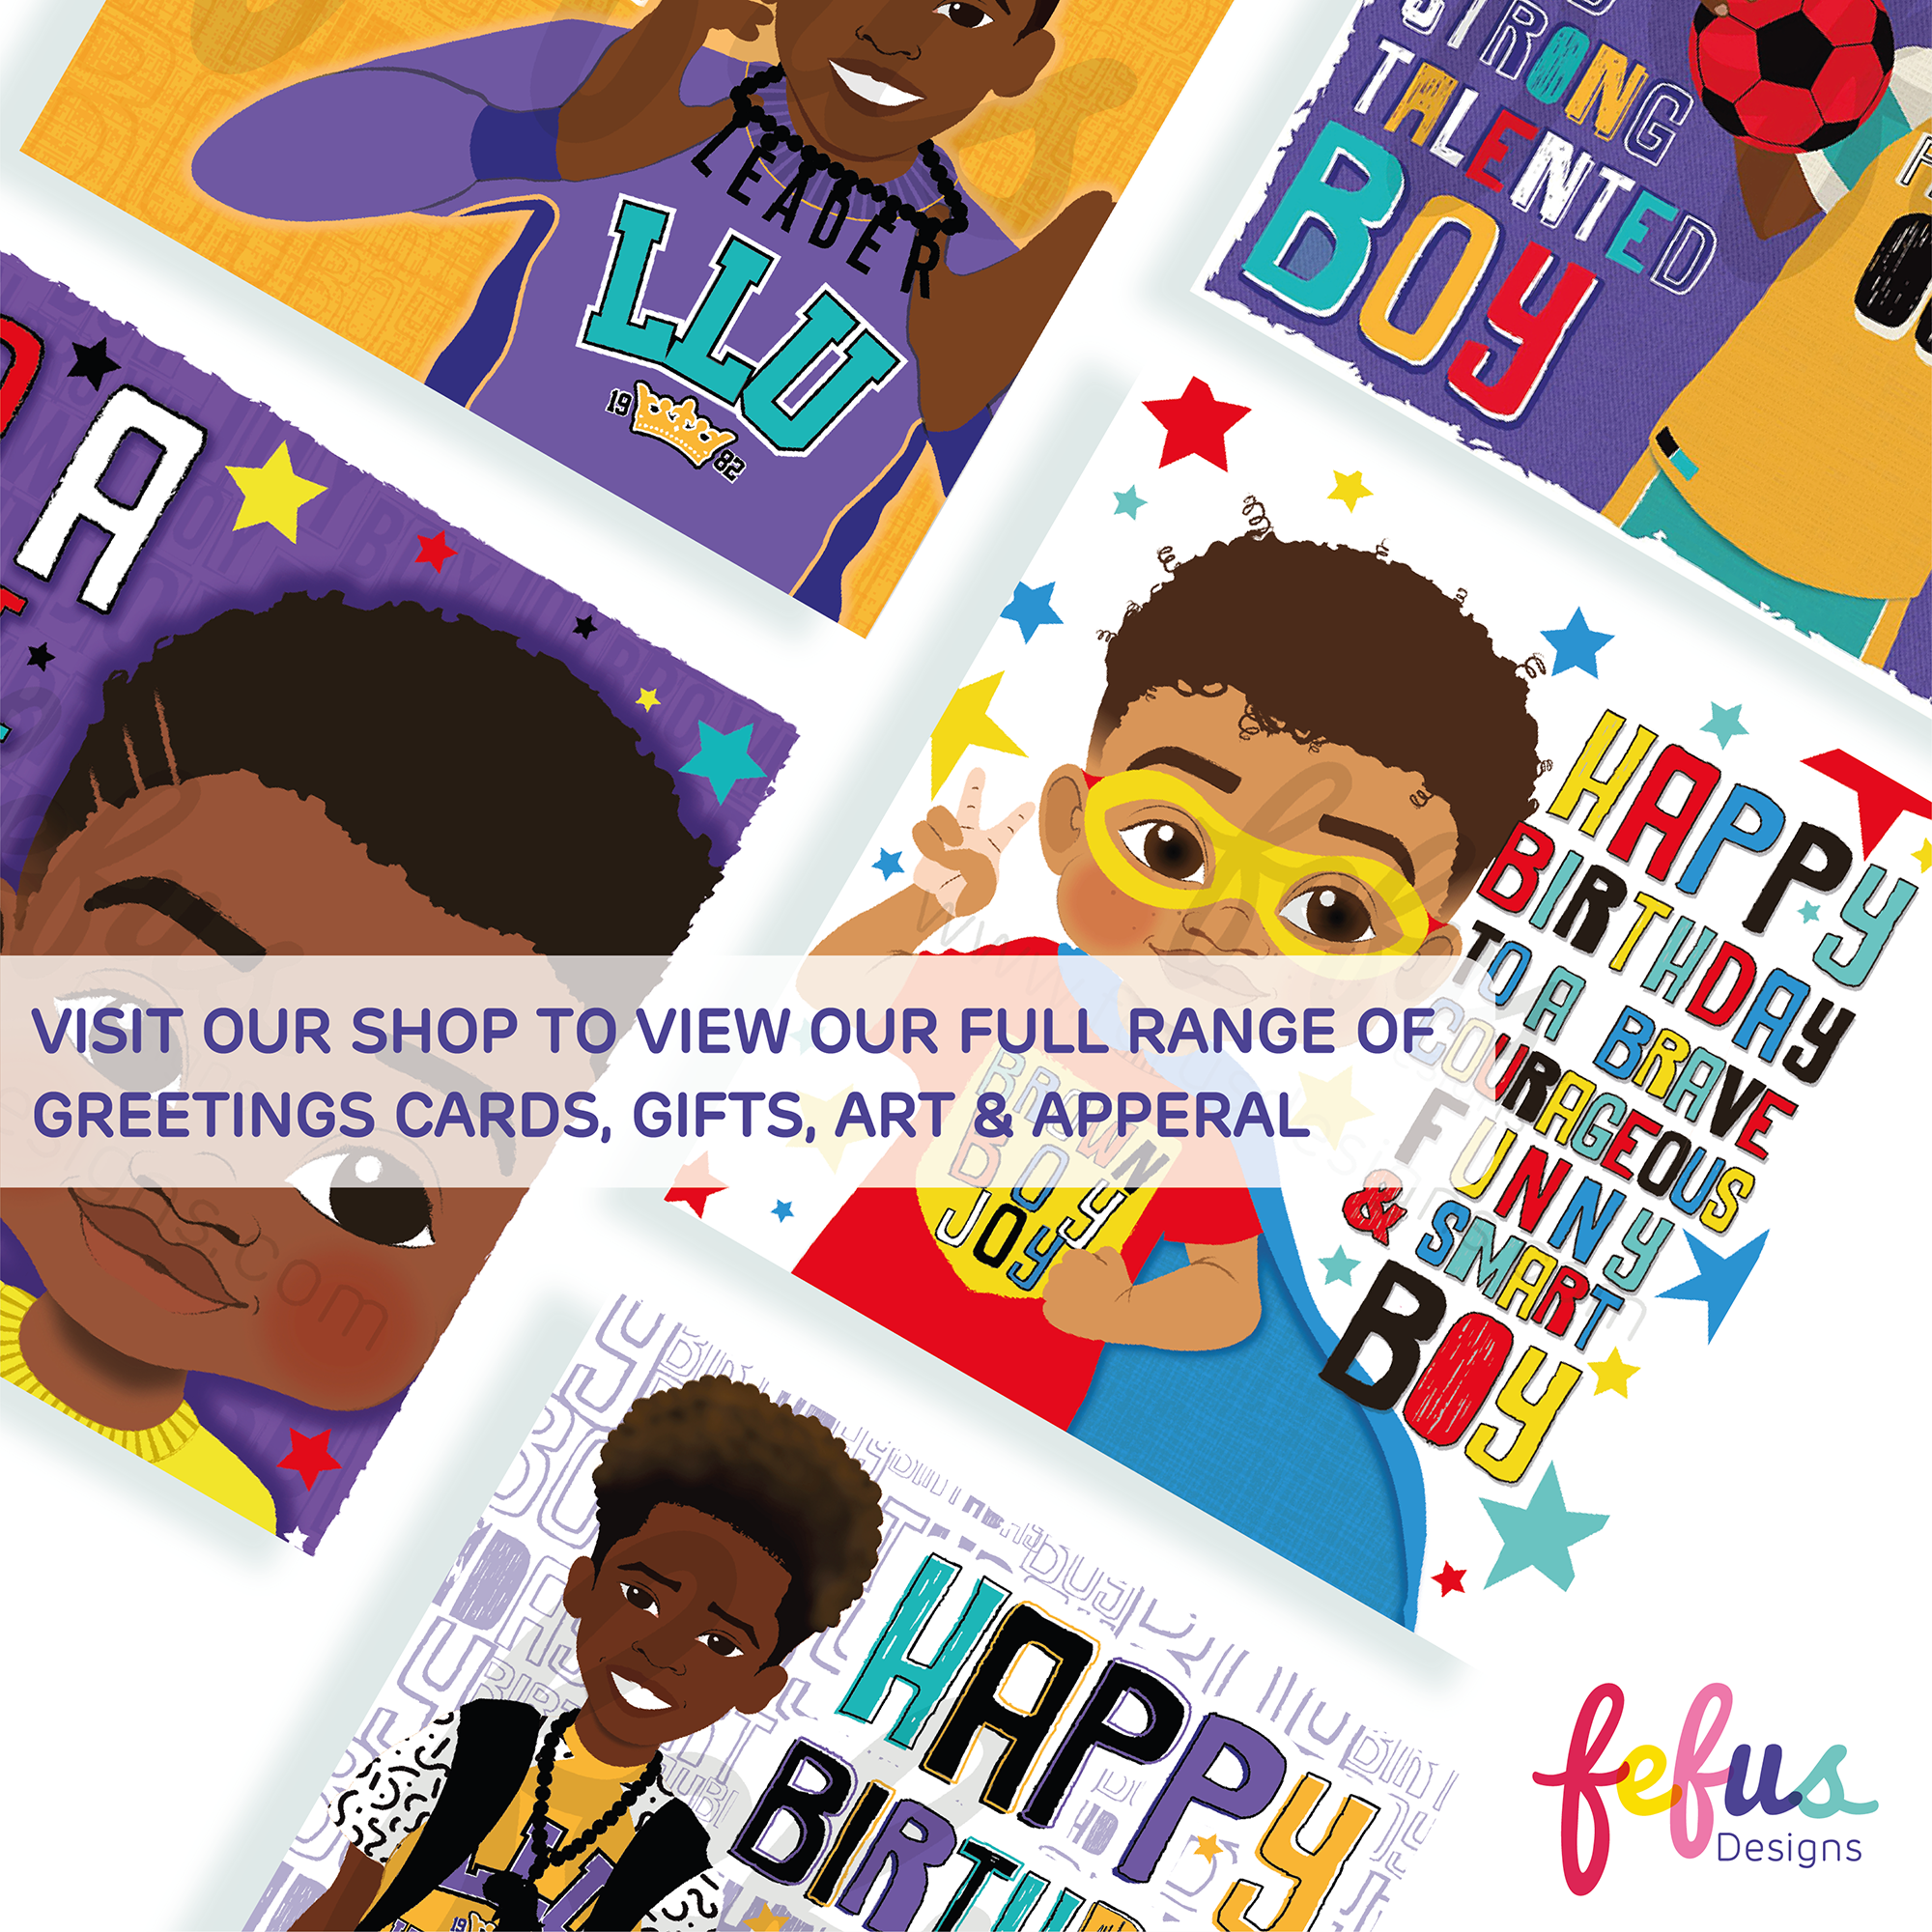 Toddler Black Boy Joy Christmas Card  | Fefus designs